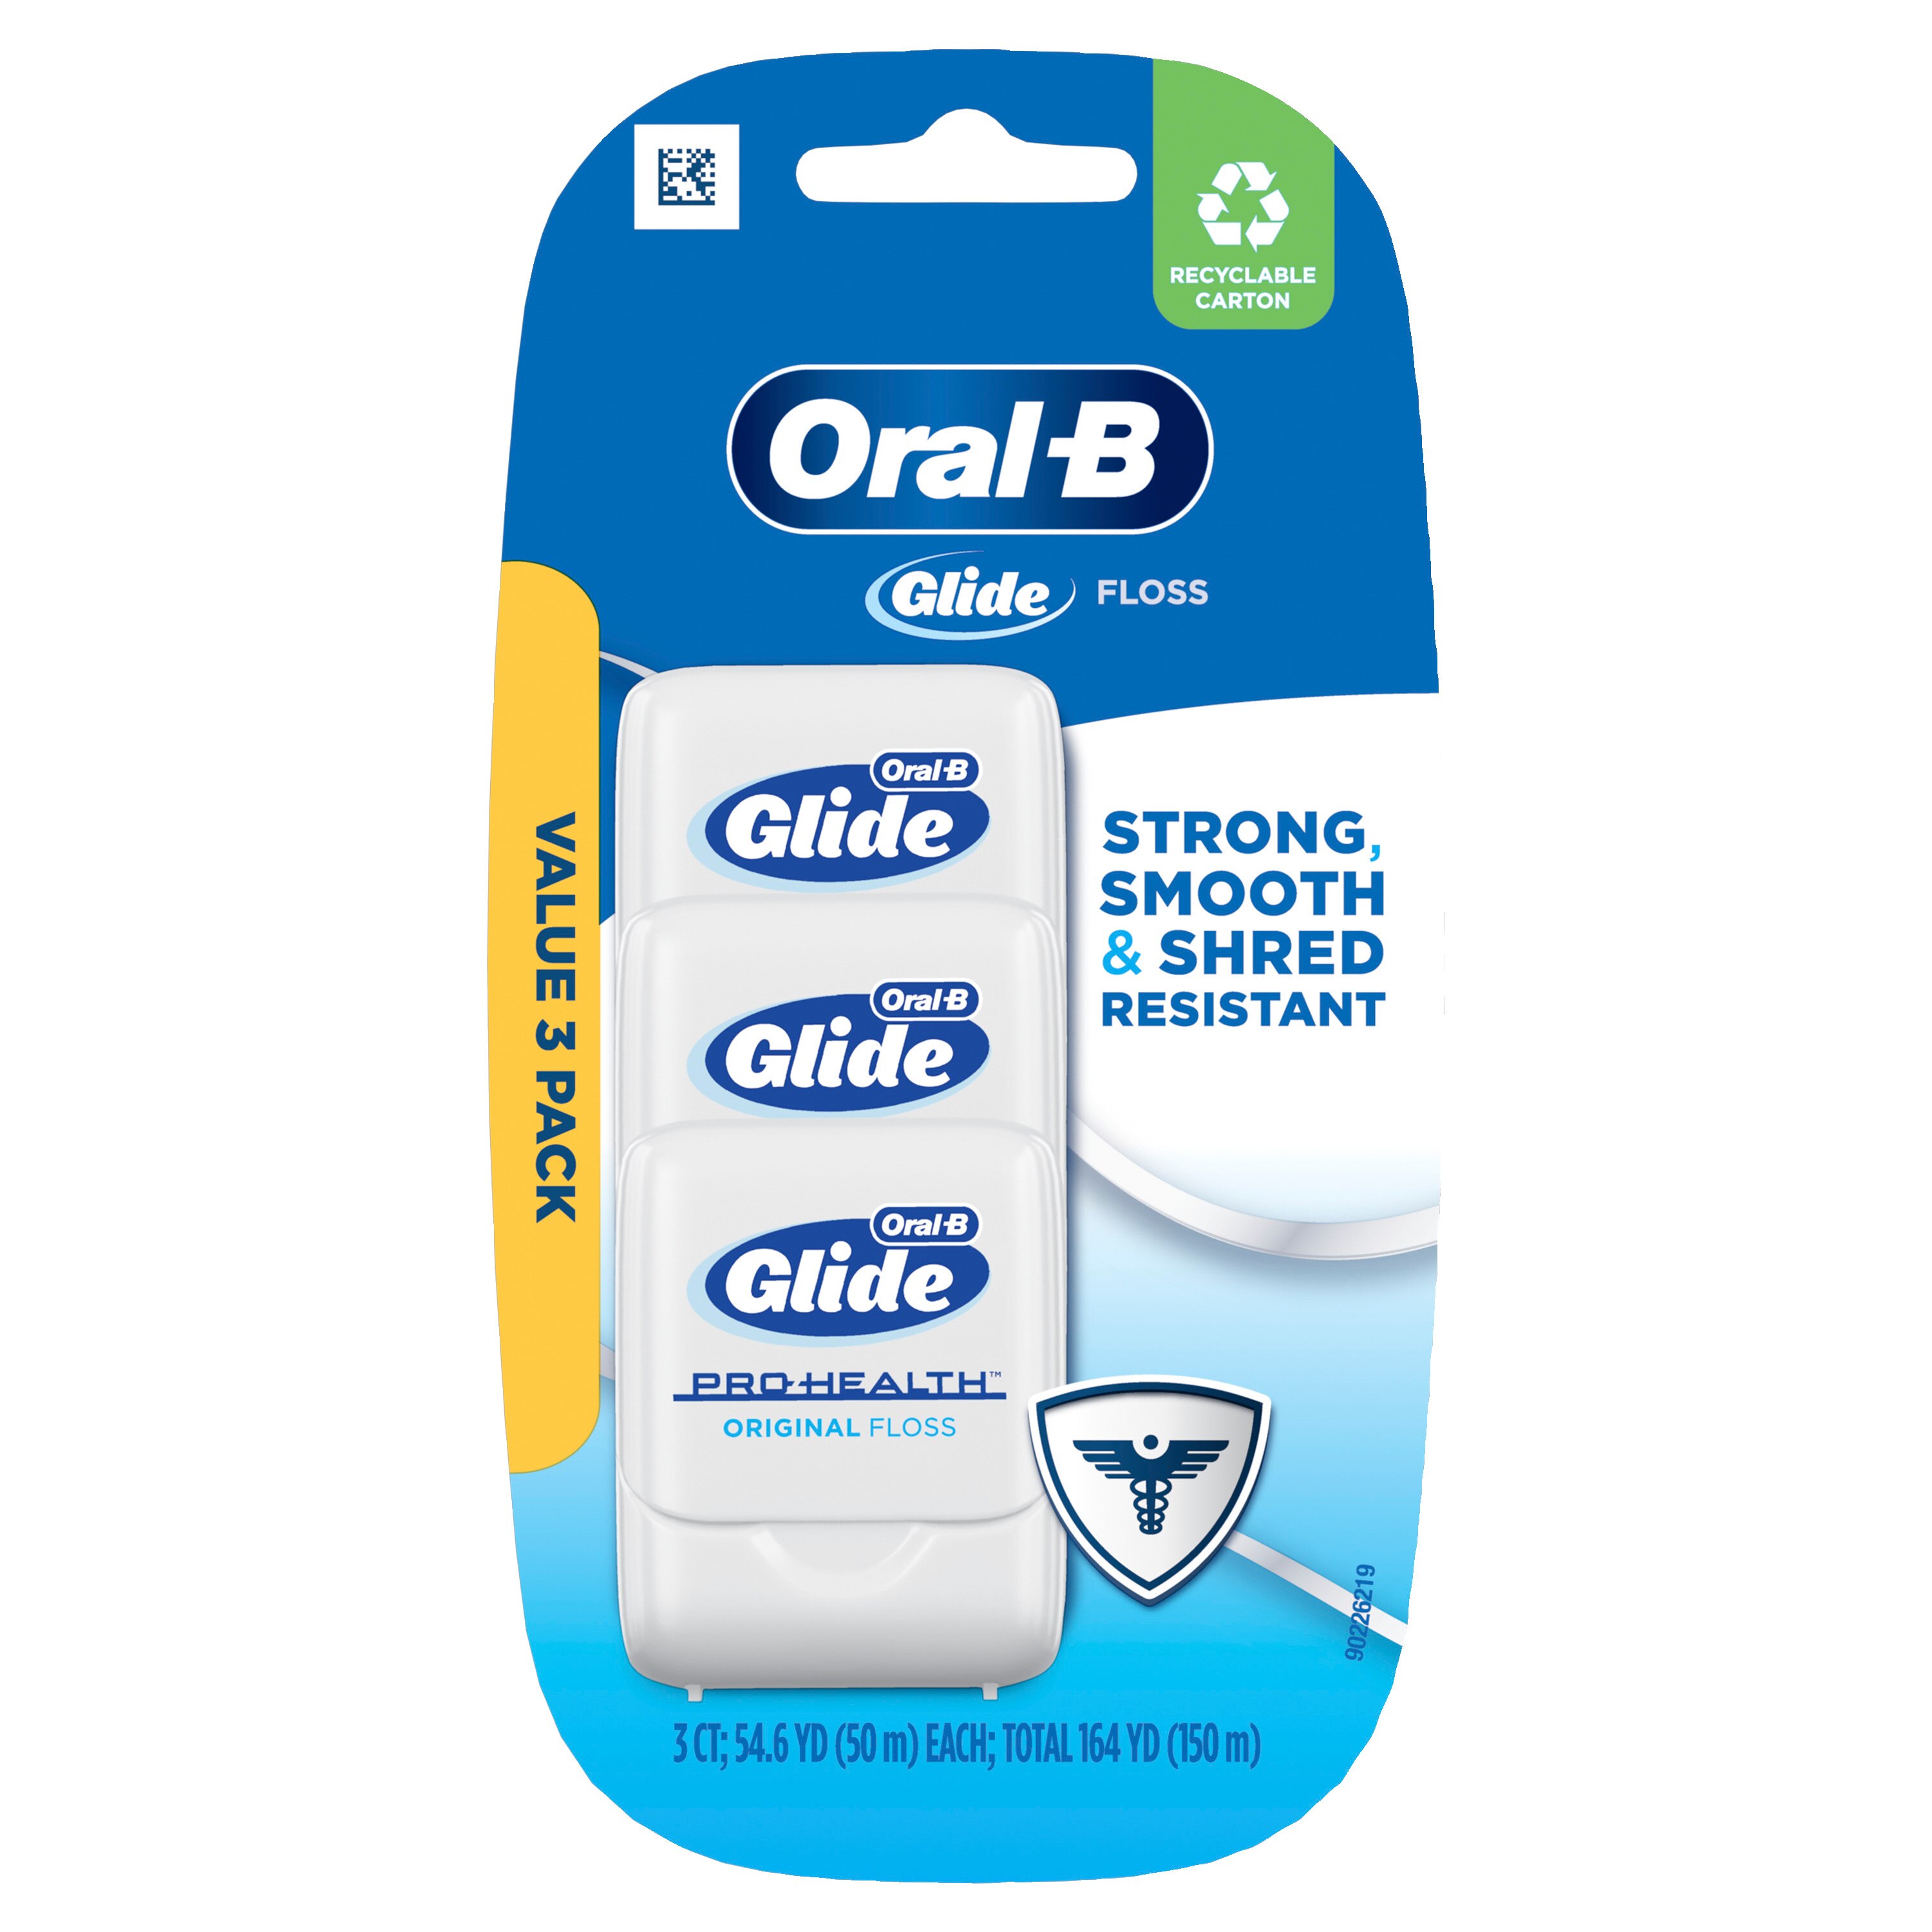 Oral-B Glide Pro-Health Original Floss, 50 M, 3 Pack - 54.6 Yd , CVS